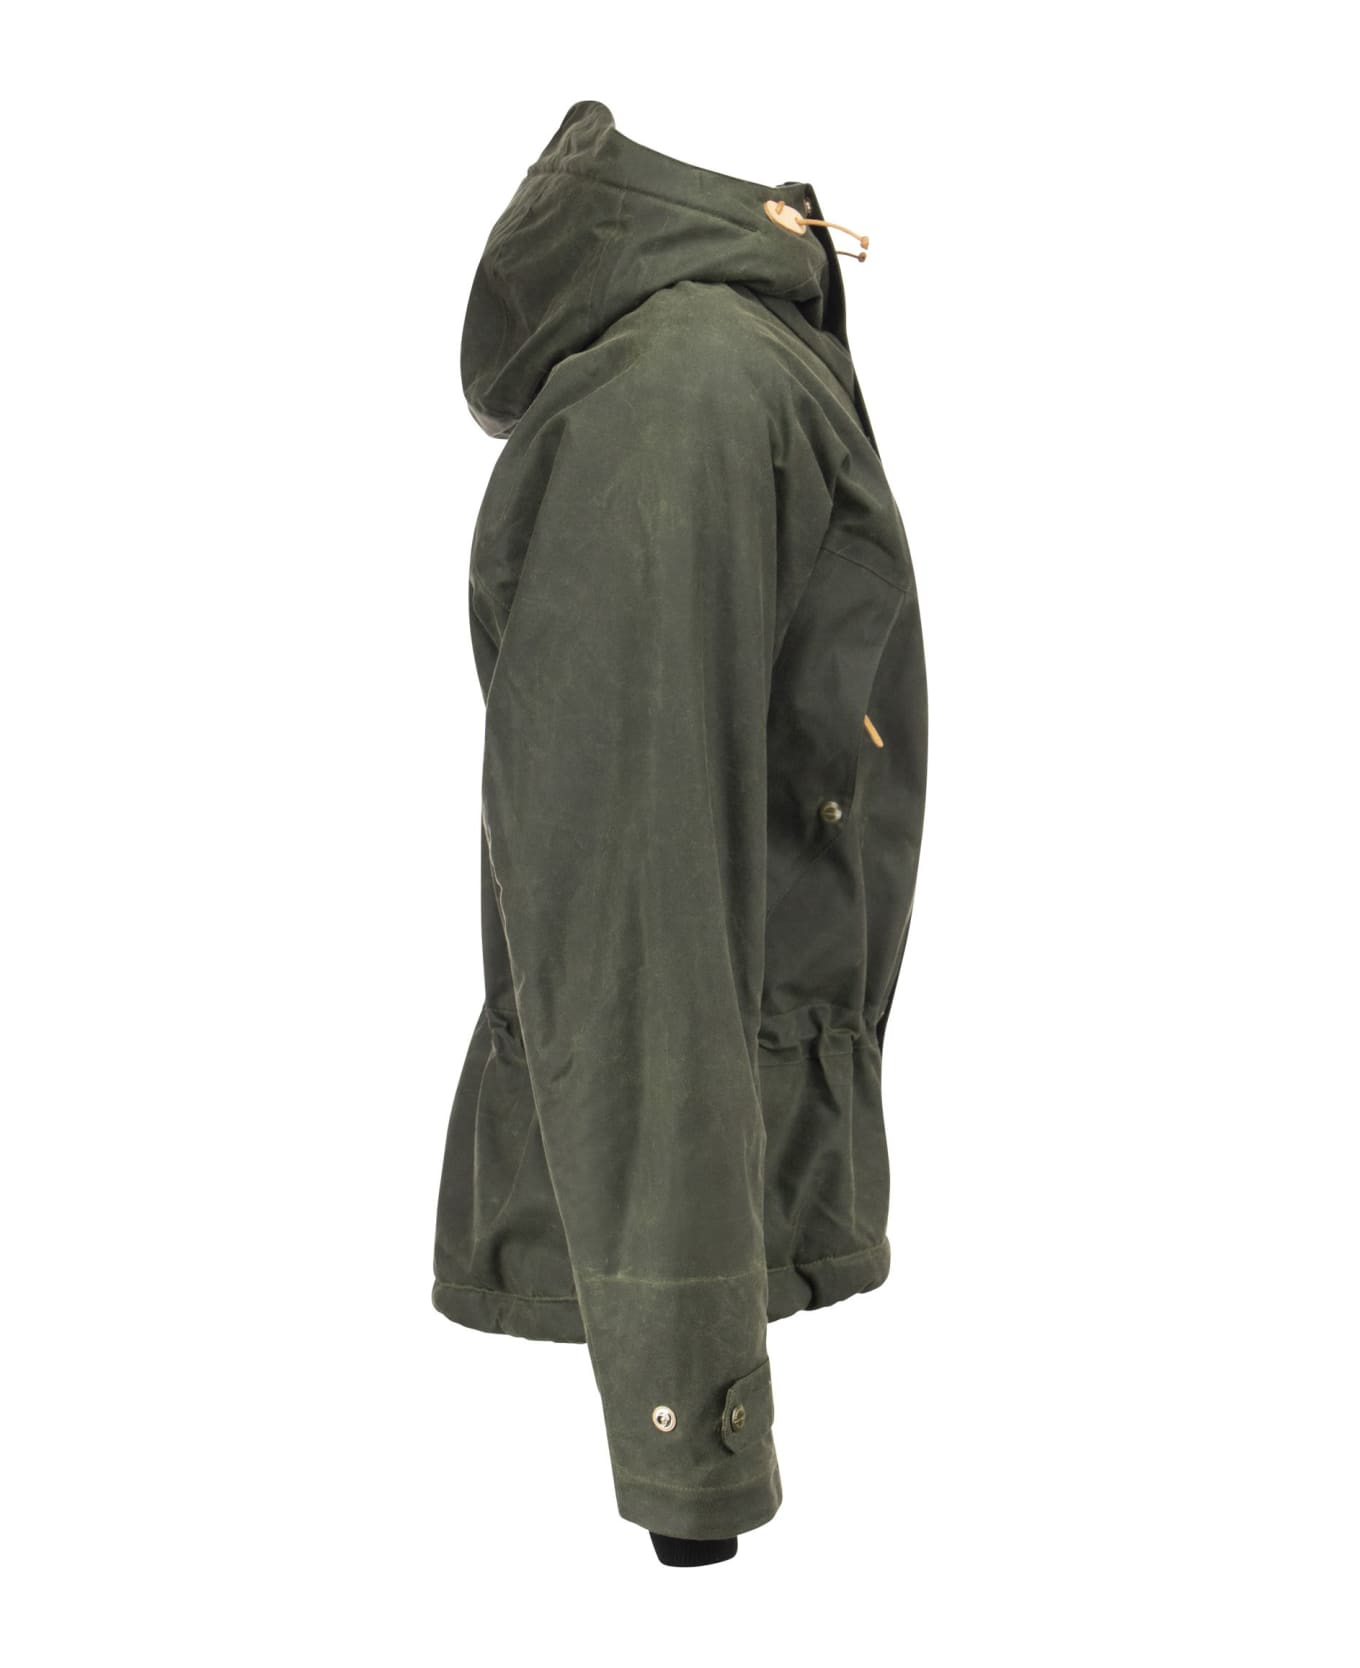 Manifattura Ceccarelli Mountain - Jacket - Military Green ジャケット